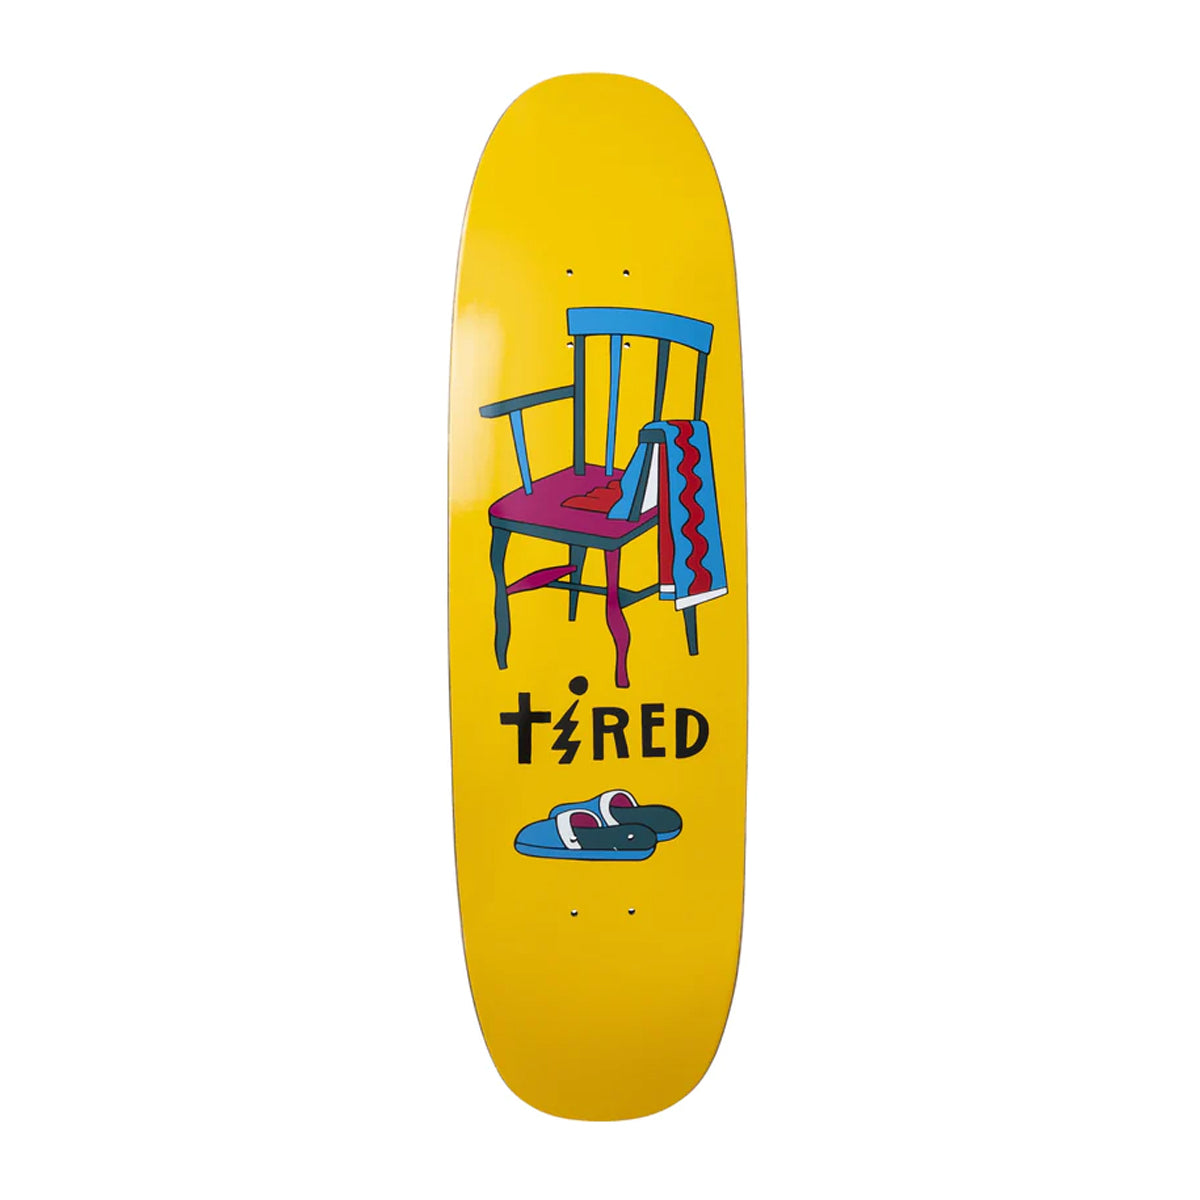 Tired Jolt Board (Donny) 8.75